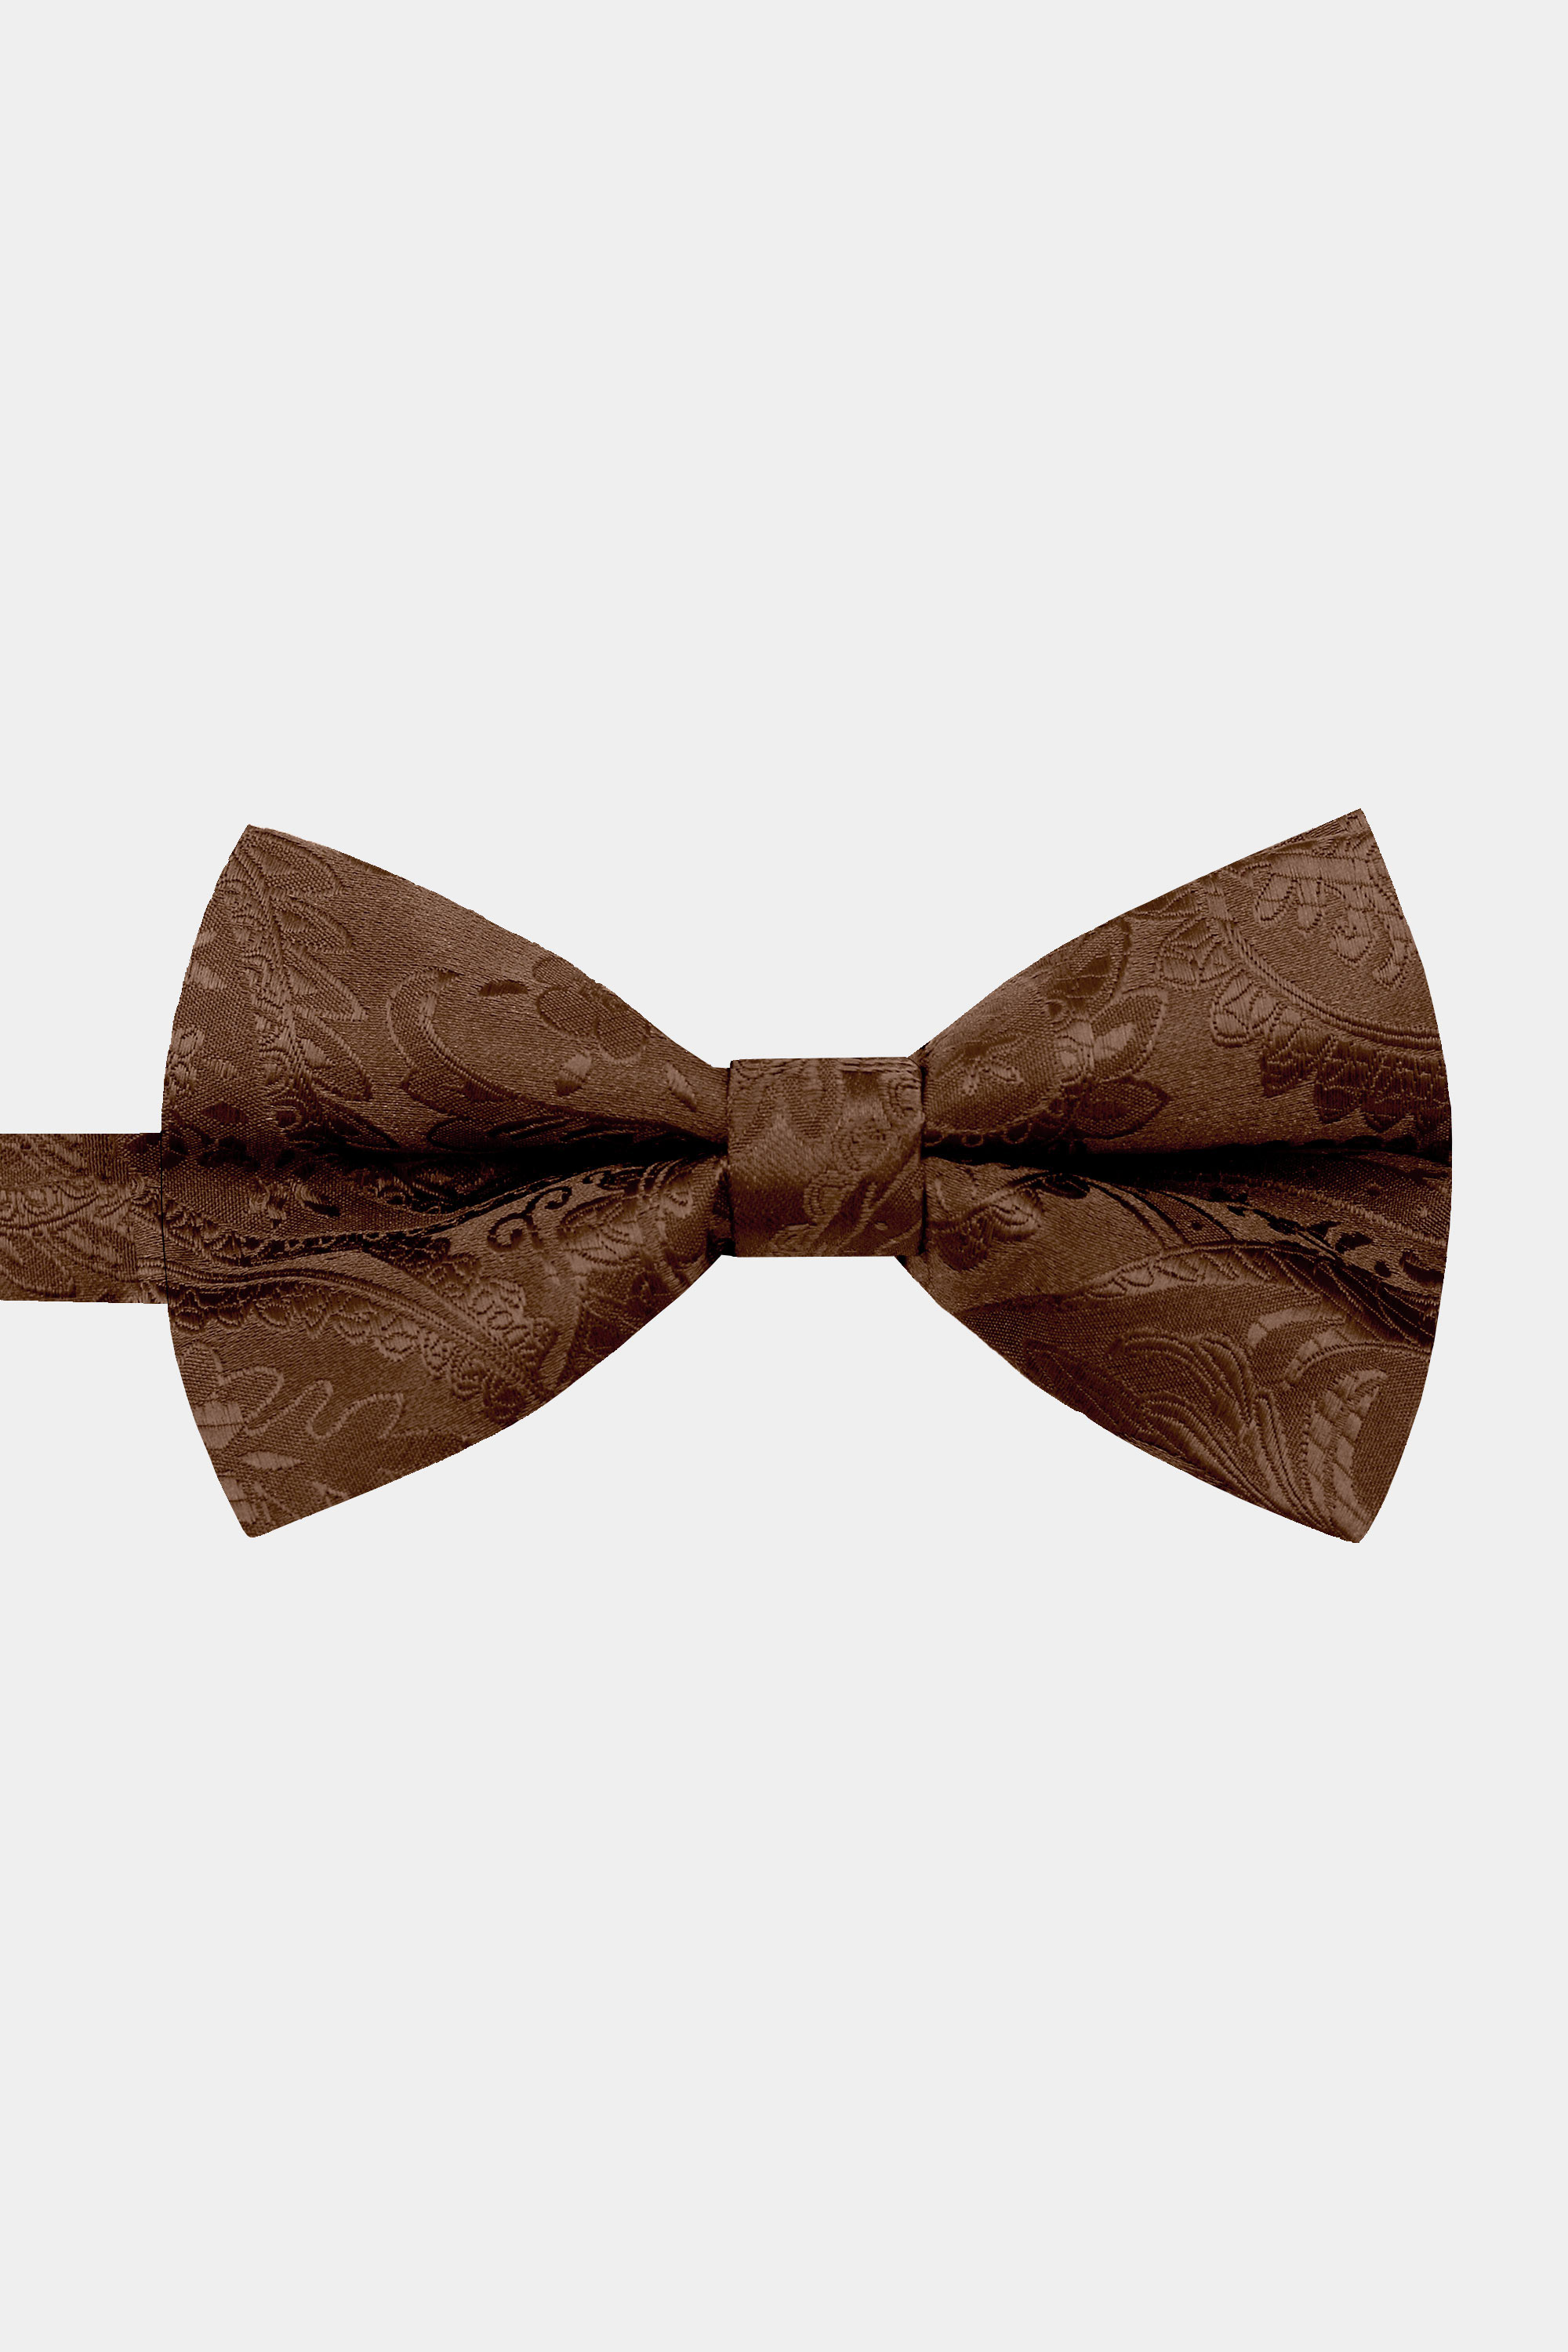 Mens-Paisley-Brown-Bow-Tie-from-Gentlemansguru.com